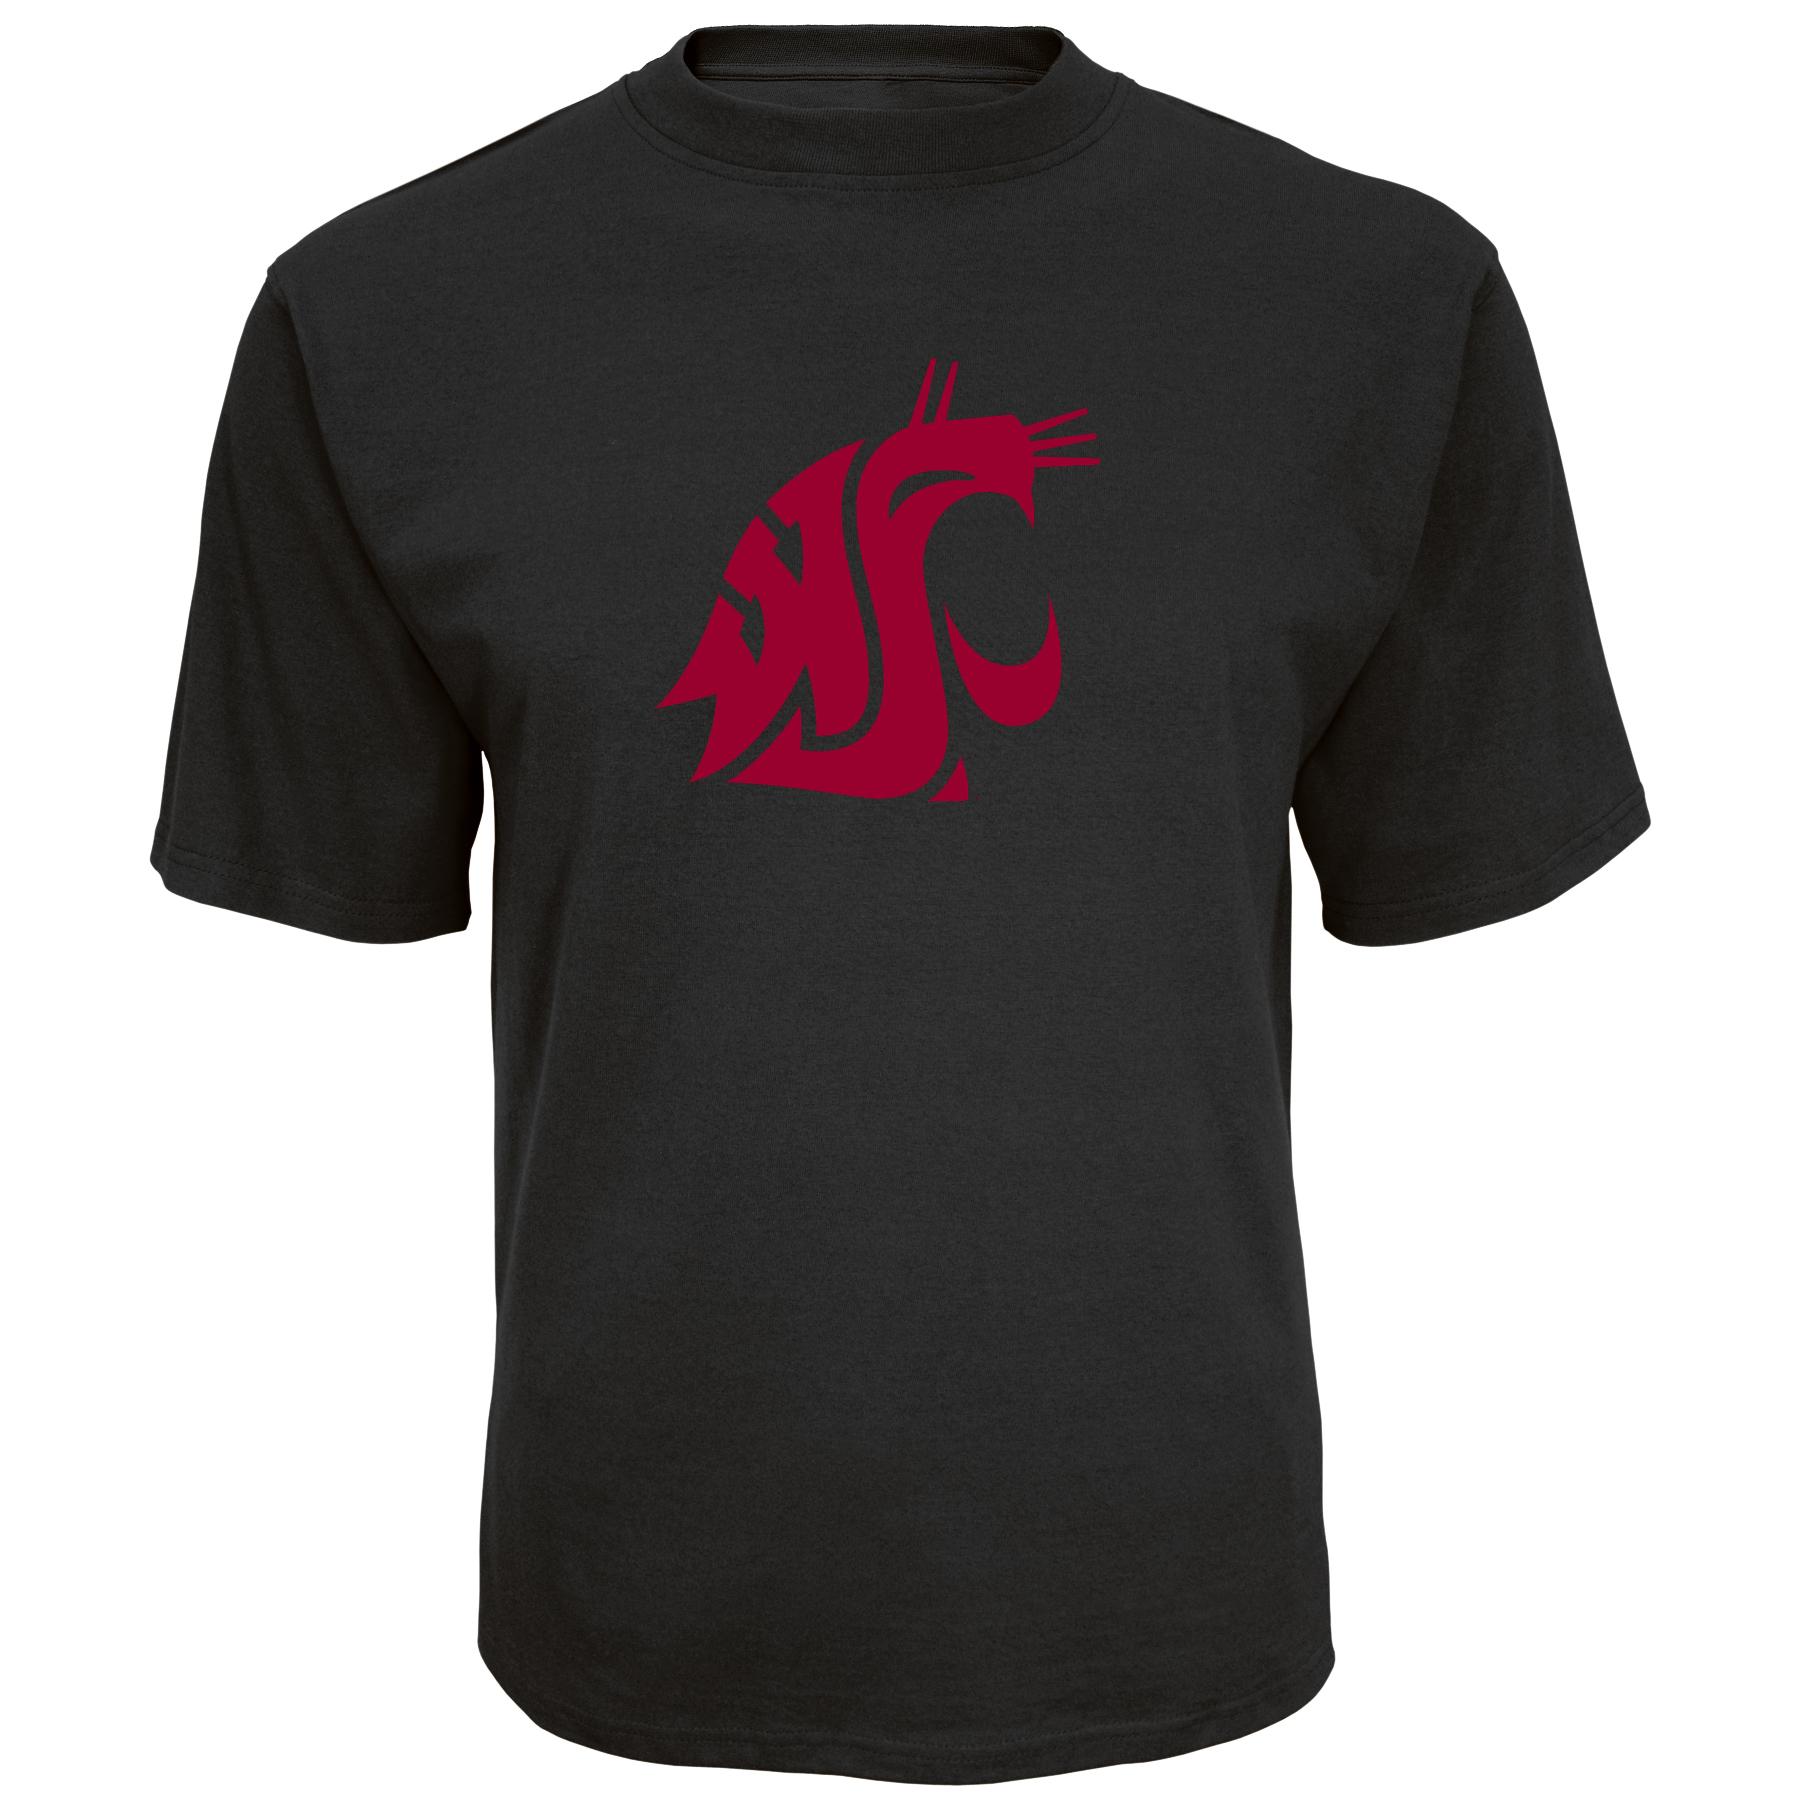 NCAA Men's Graphic T-Shirt - Washington State Cougars